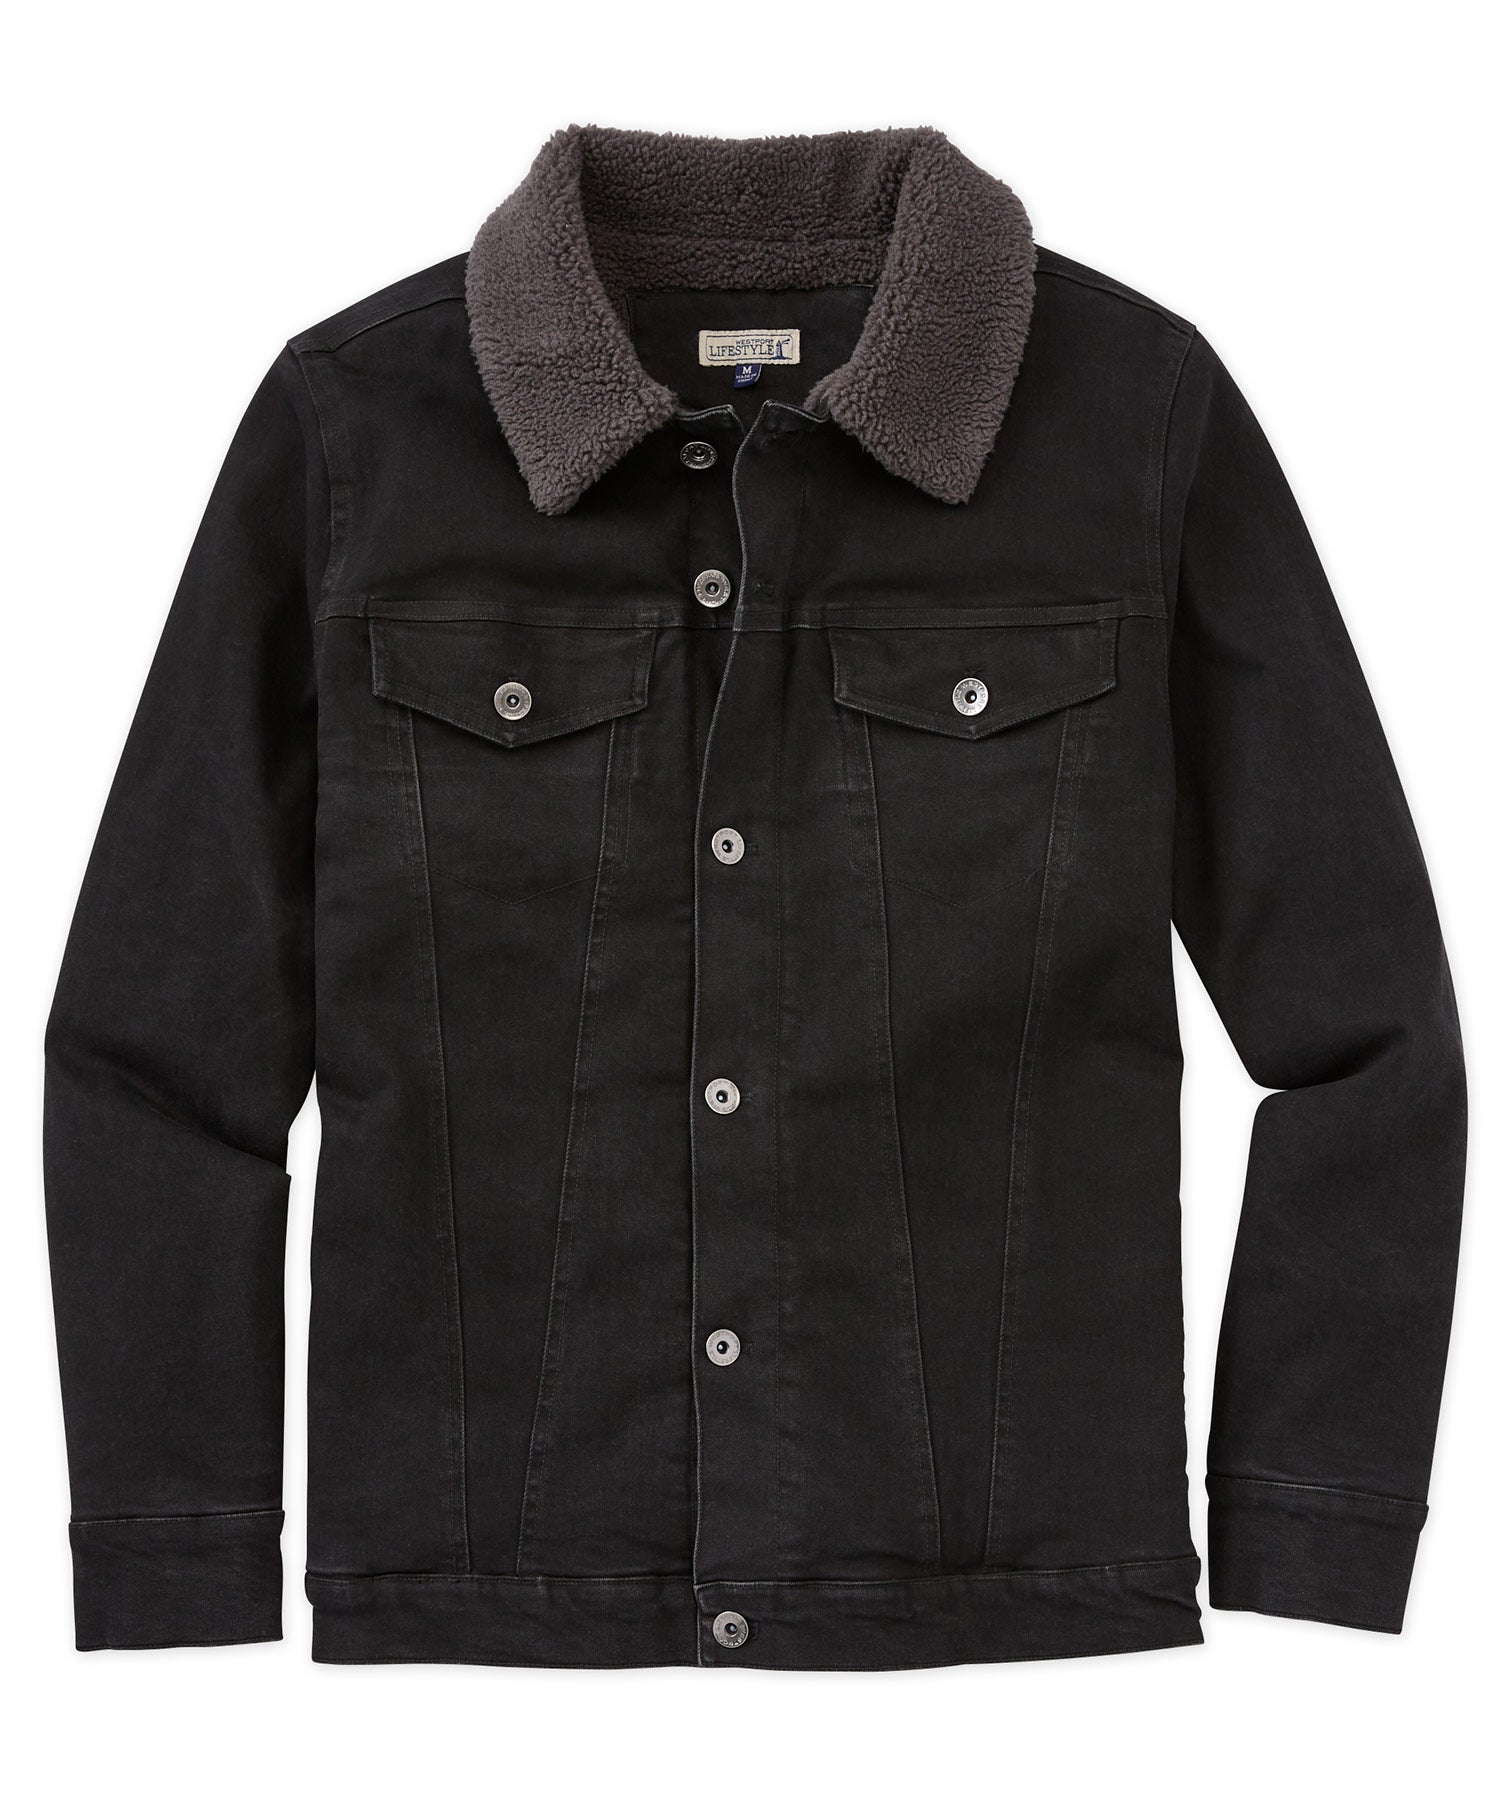 Westport Black Stretch Cotton Blouson Jacket  Blouson, Black stretch, Big  and tall jackets